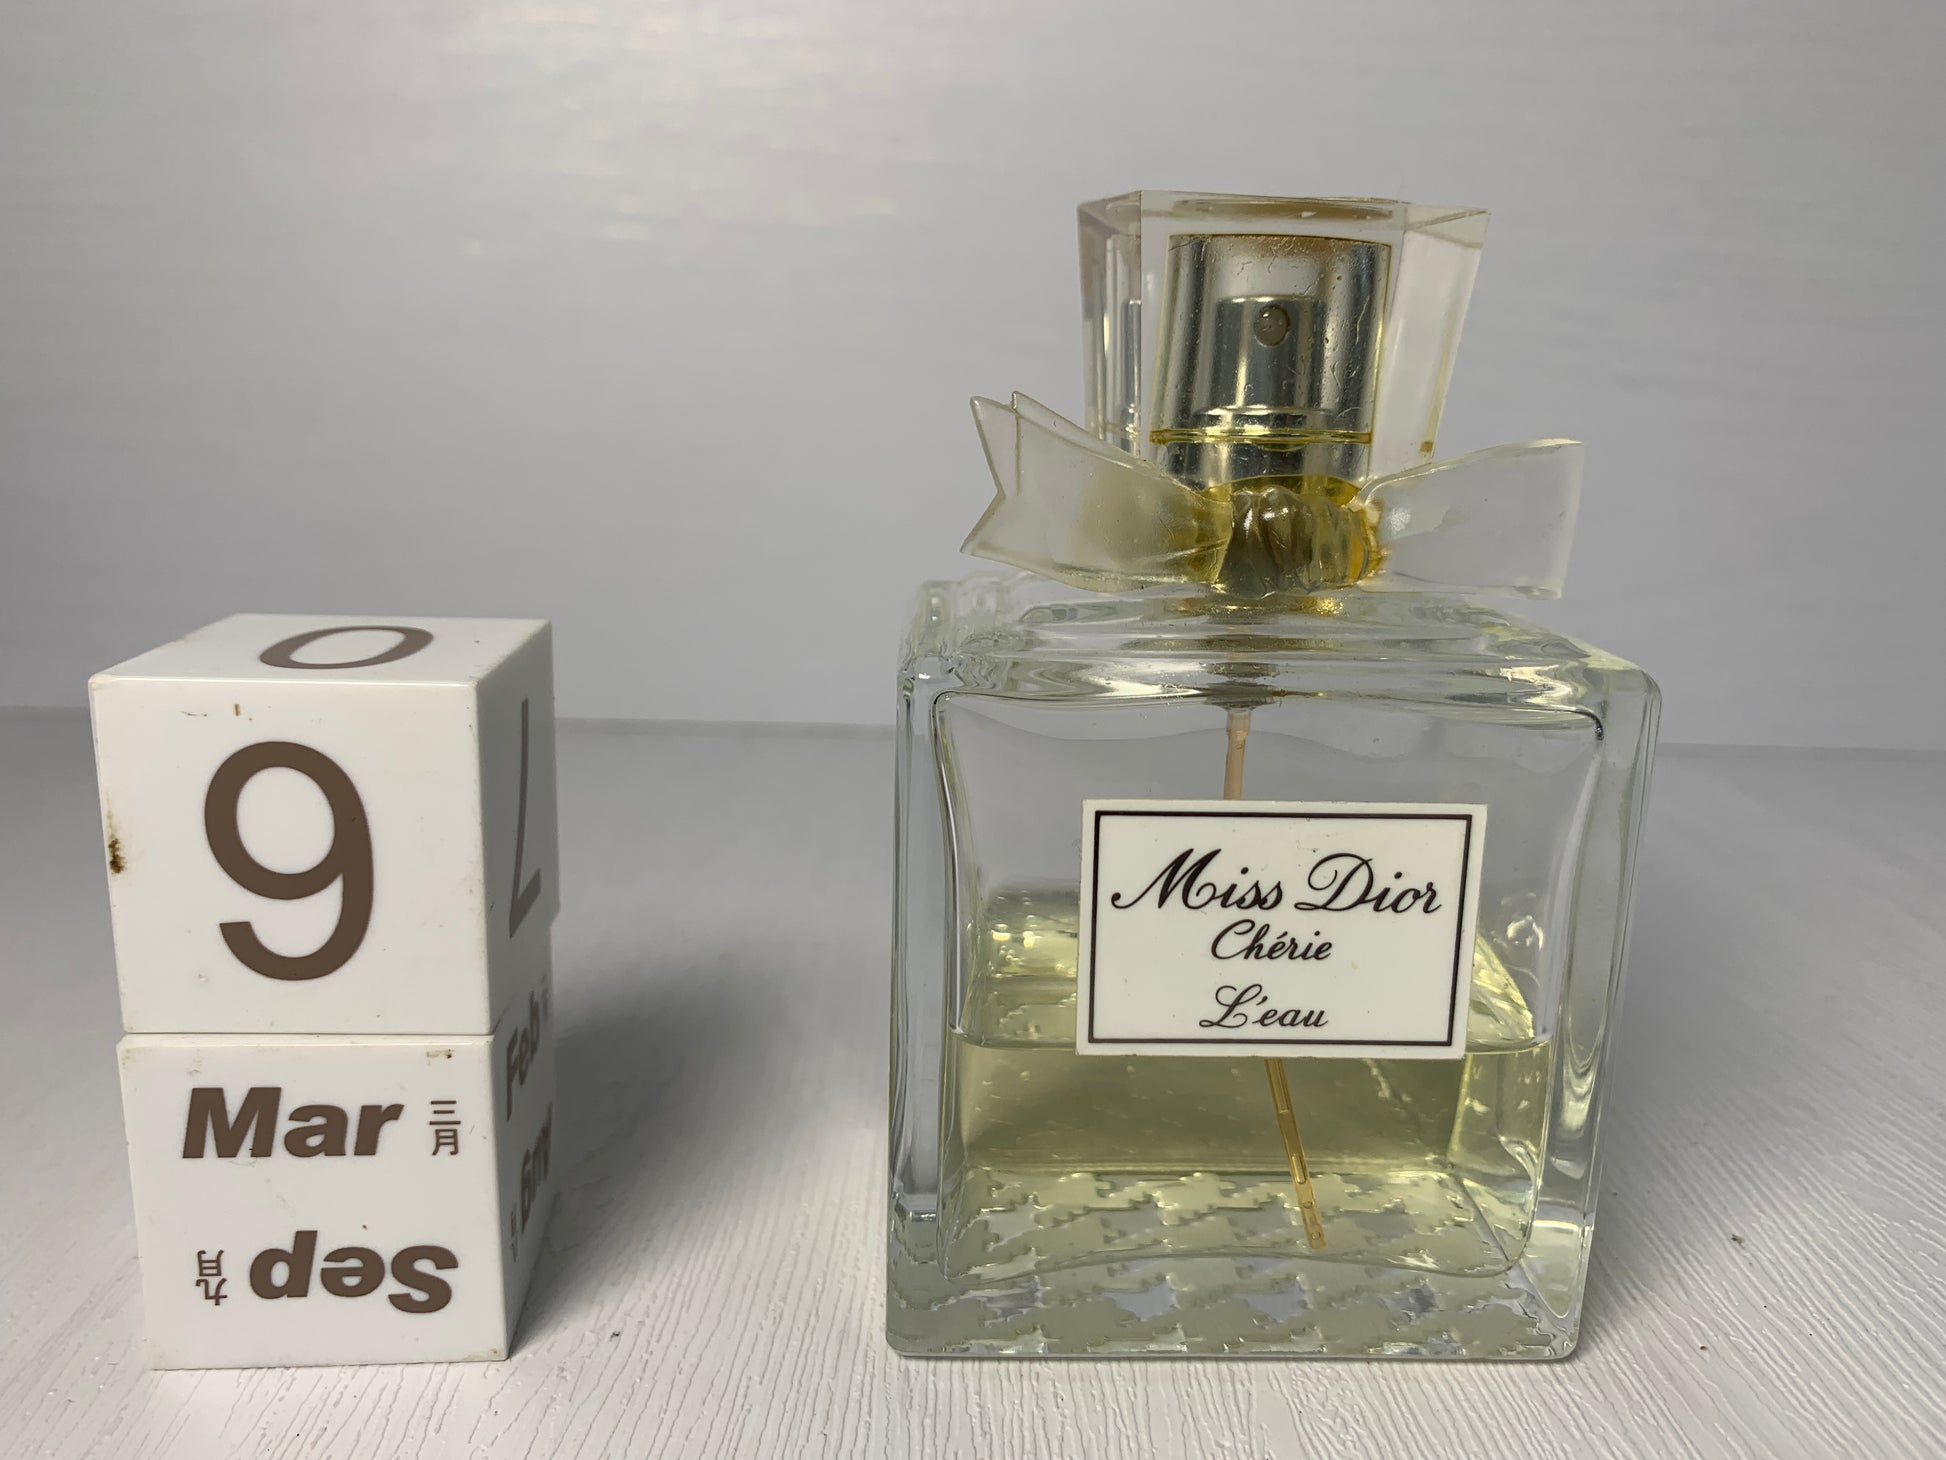 Miss Dior Cherie Perfume by Christian Dior, 3.4 oz Eau De Toilette